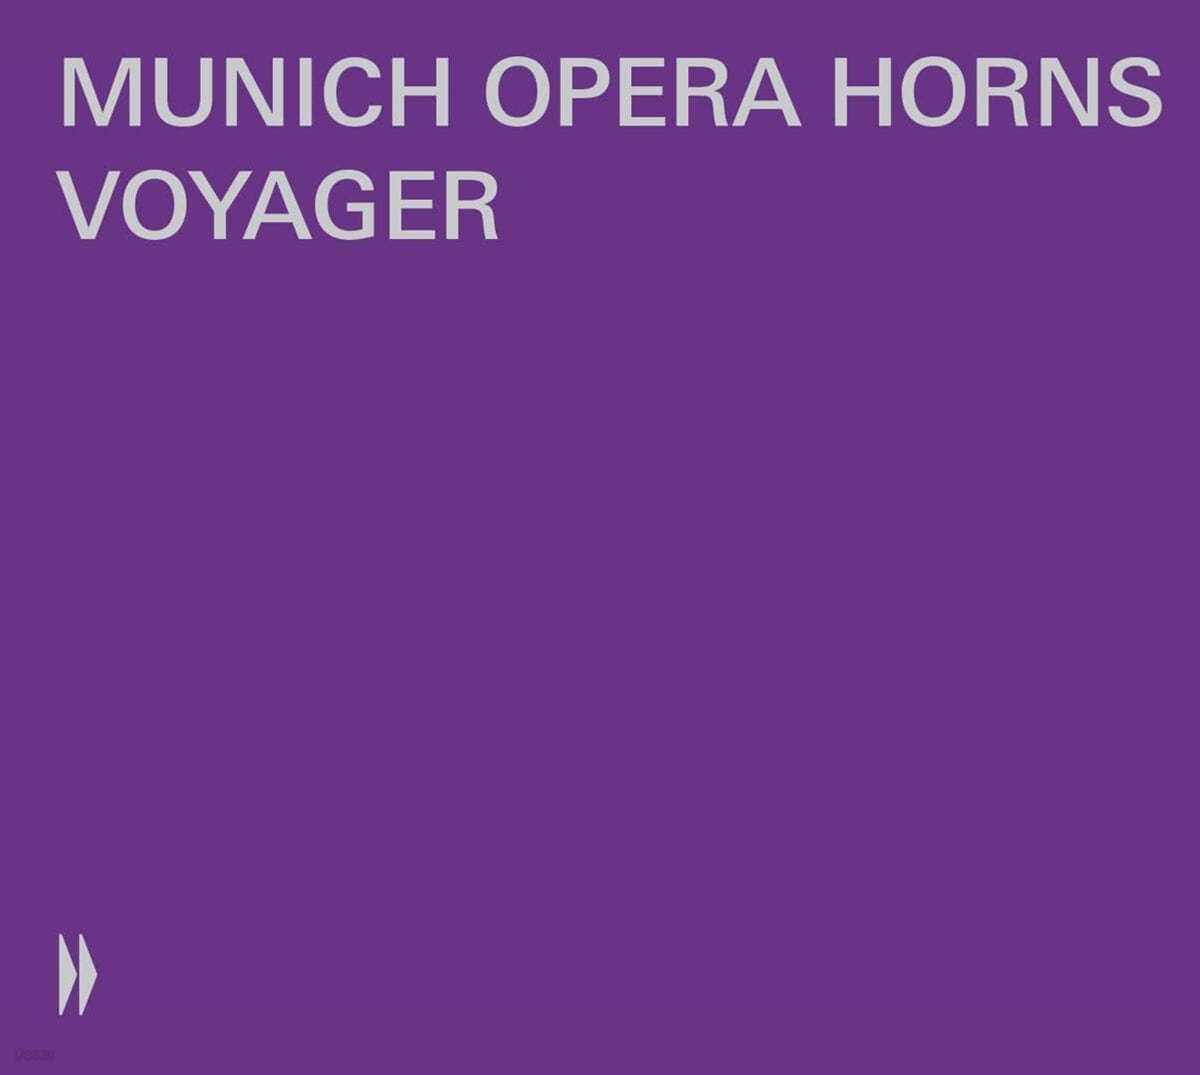 Munich Opera Horns (뮌헨 오페라 호른) - Voyager